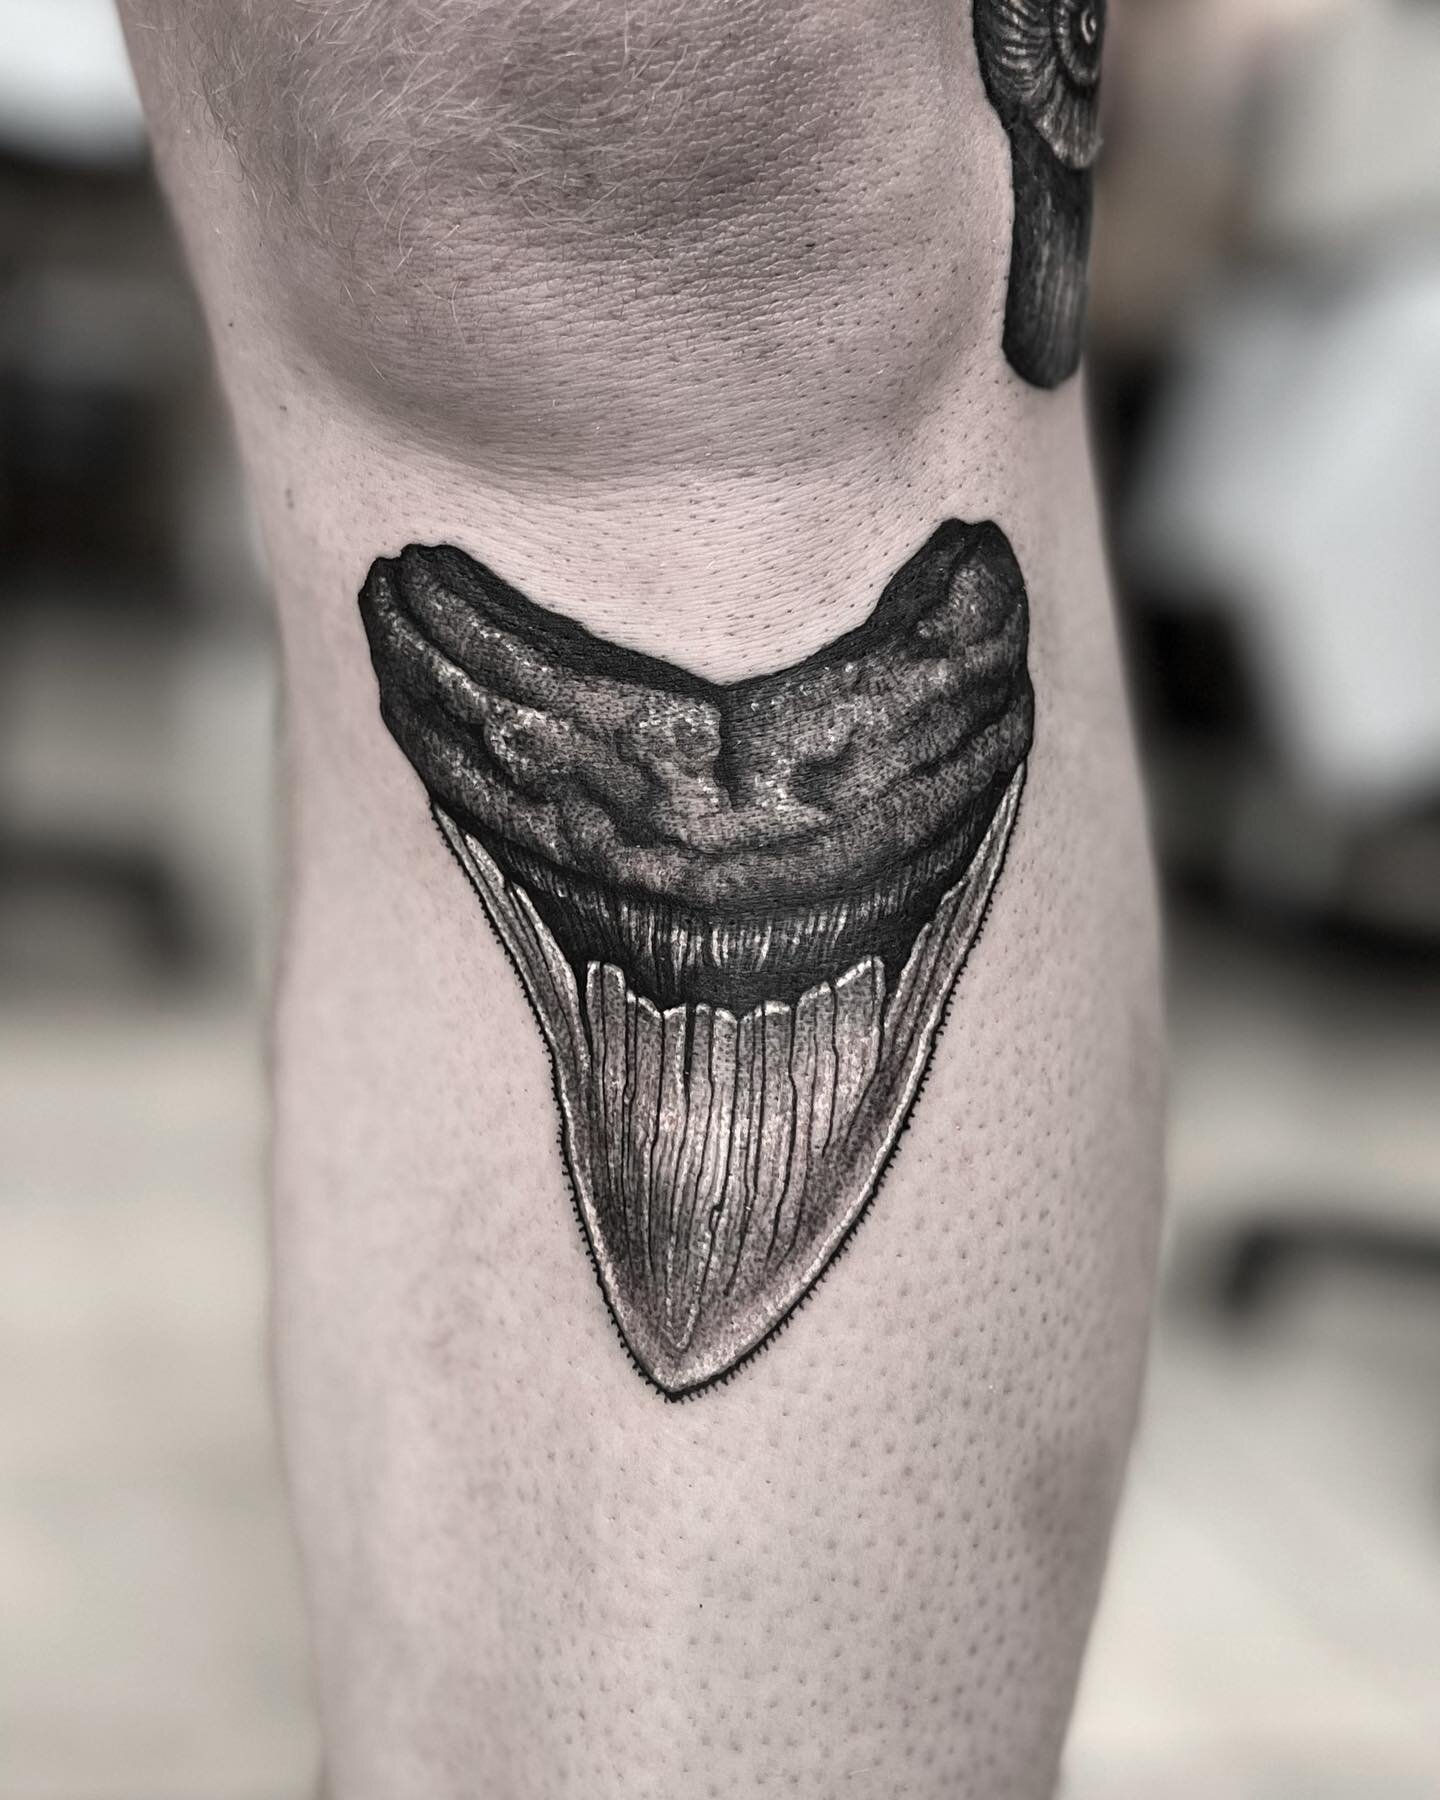 Sharktooth Saturday 🖤 🦈 
Swipe to see the cool ✨ammonite✨ tattoo we did on the side of the knee! 
✖️ Done at @sharktooth_tattoo ✖️
.
.
.
.
@goodguysupply
@industryinks
@hivecaps 
.
.
.
.
.
.
.
.
.
.
.
.
.
#tattoo #tattoos #tattooartist #tattooed #b